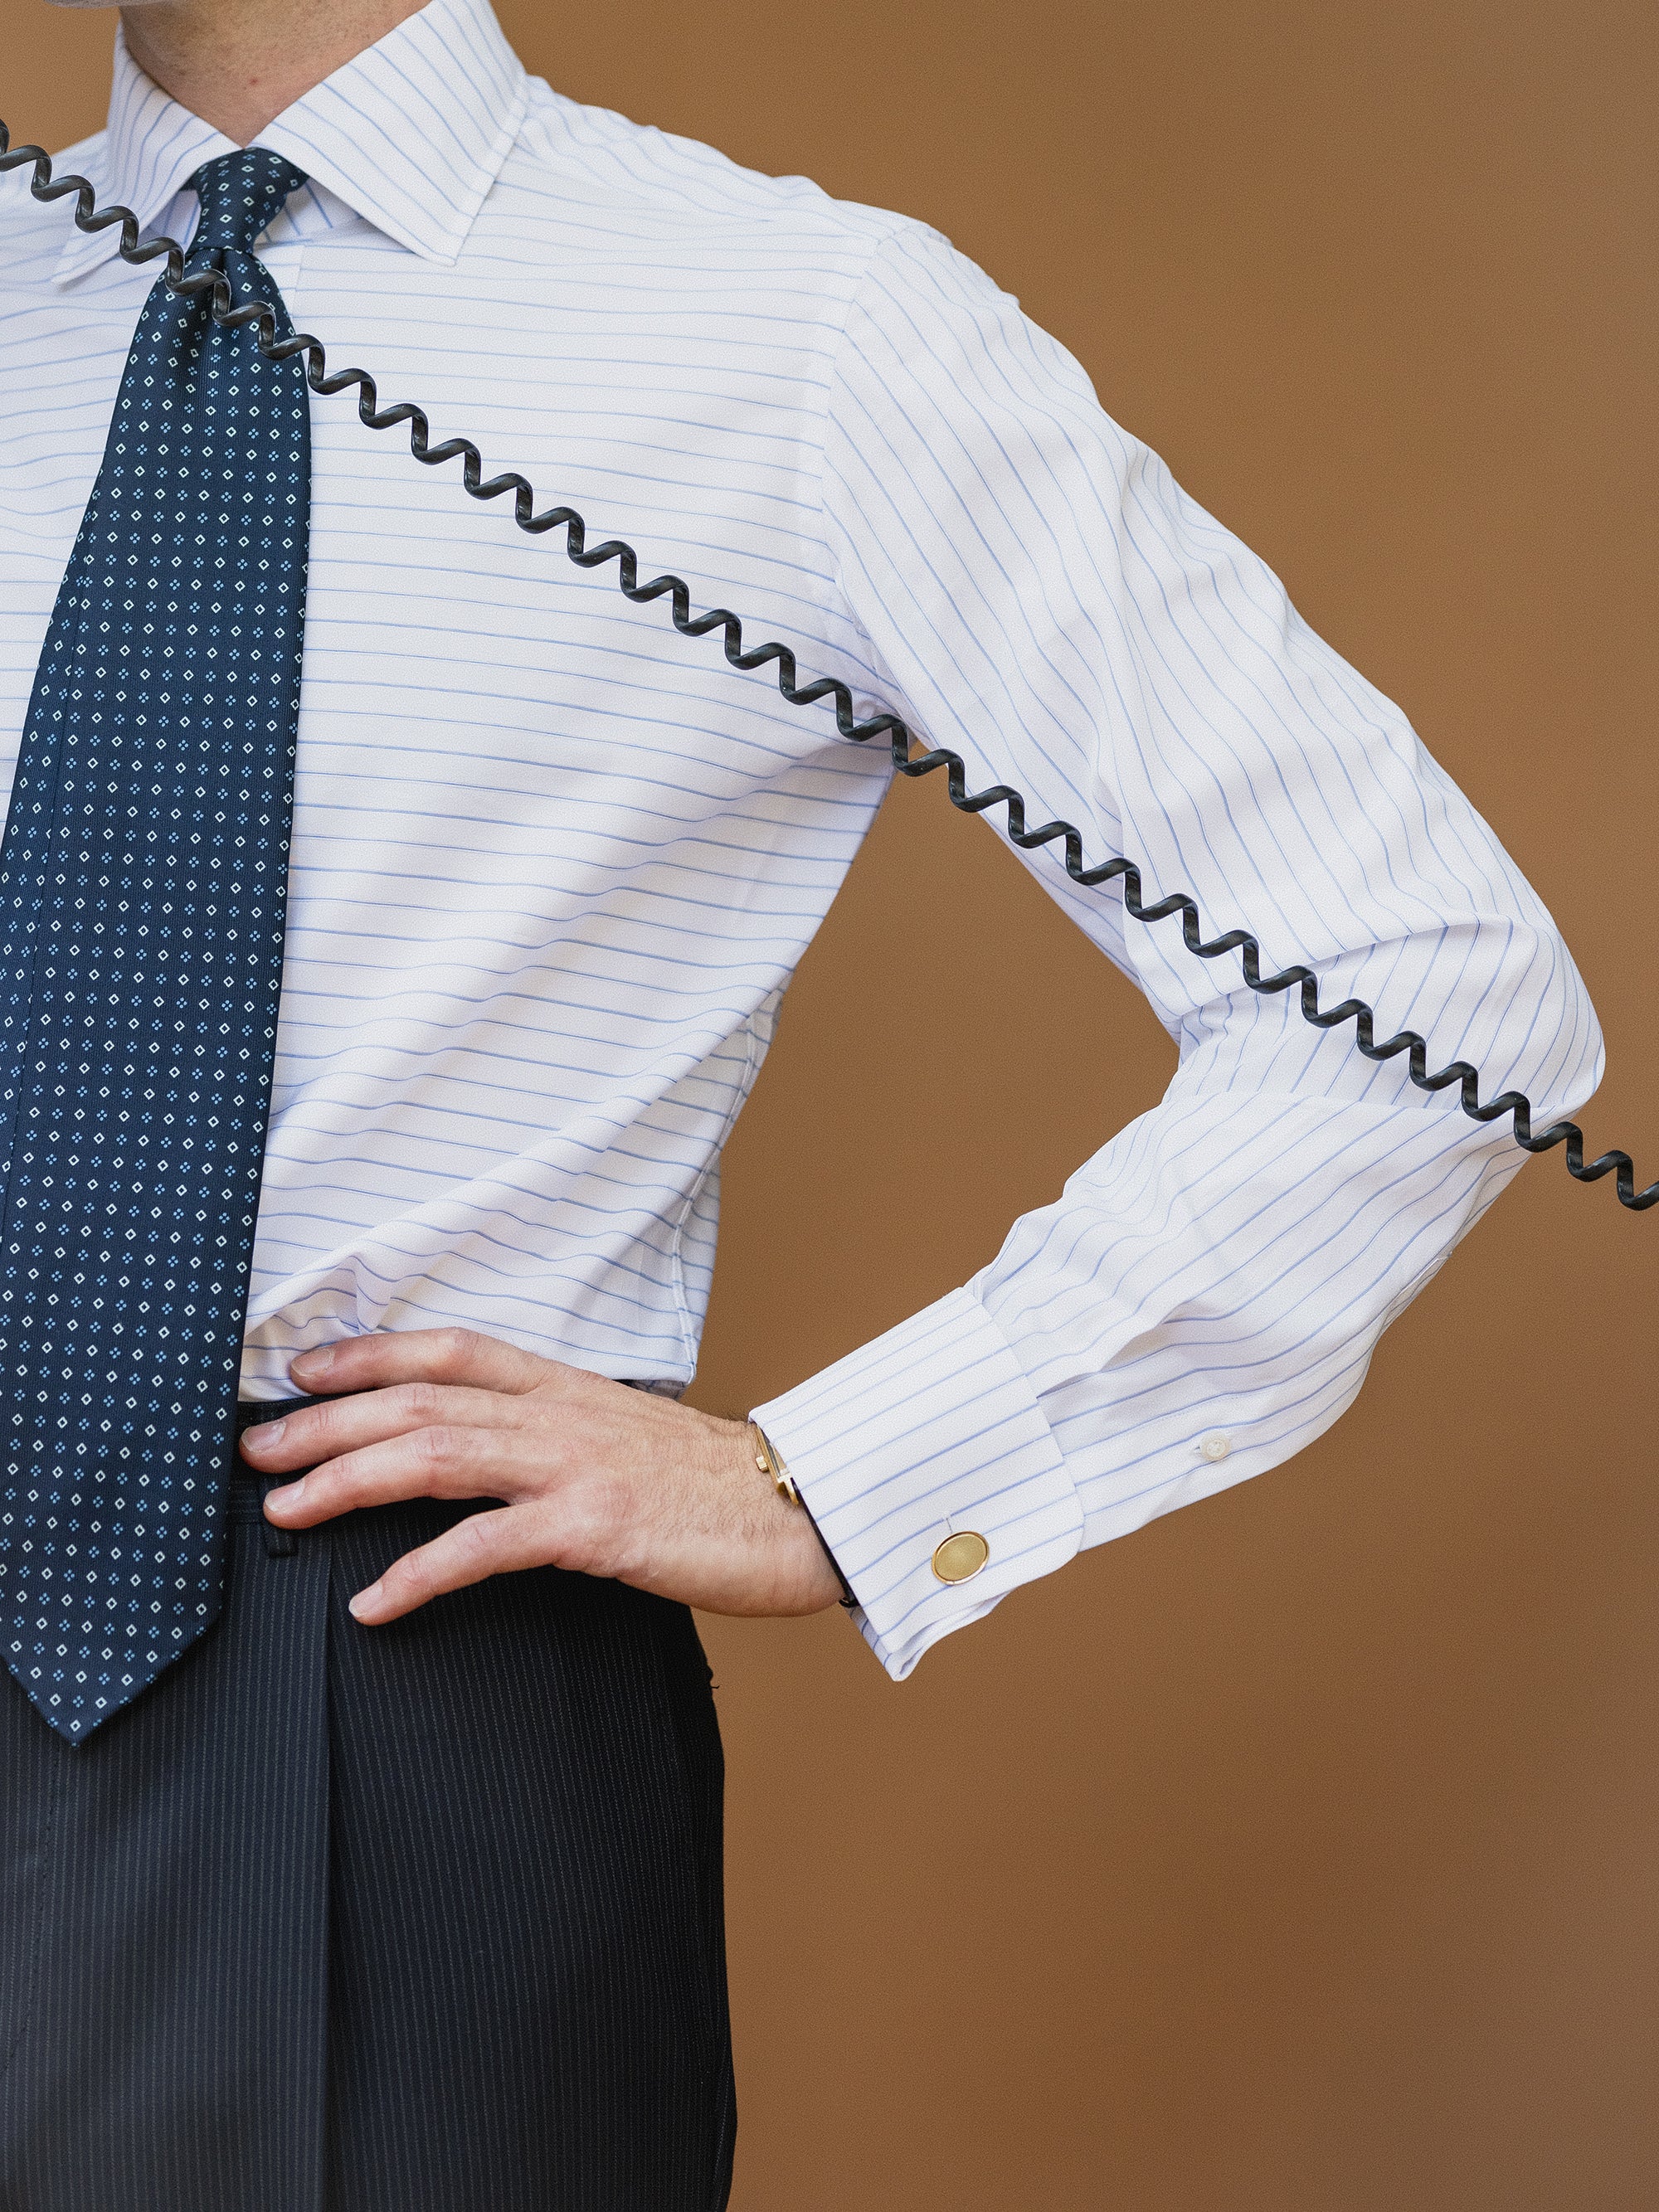 A horizontal striped poplin shirt as worn by Gordon Gekko in Wall Street